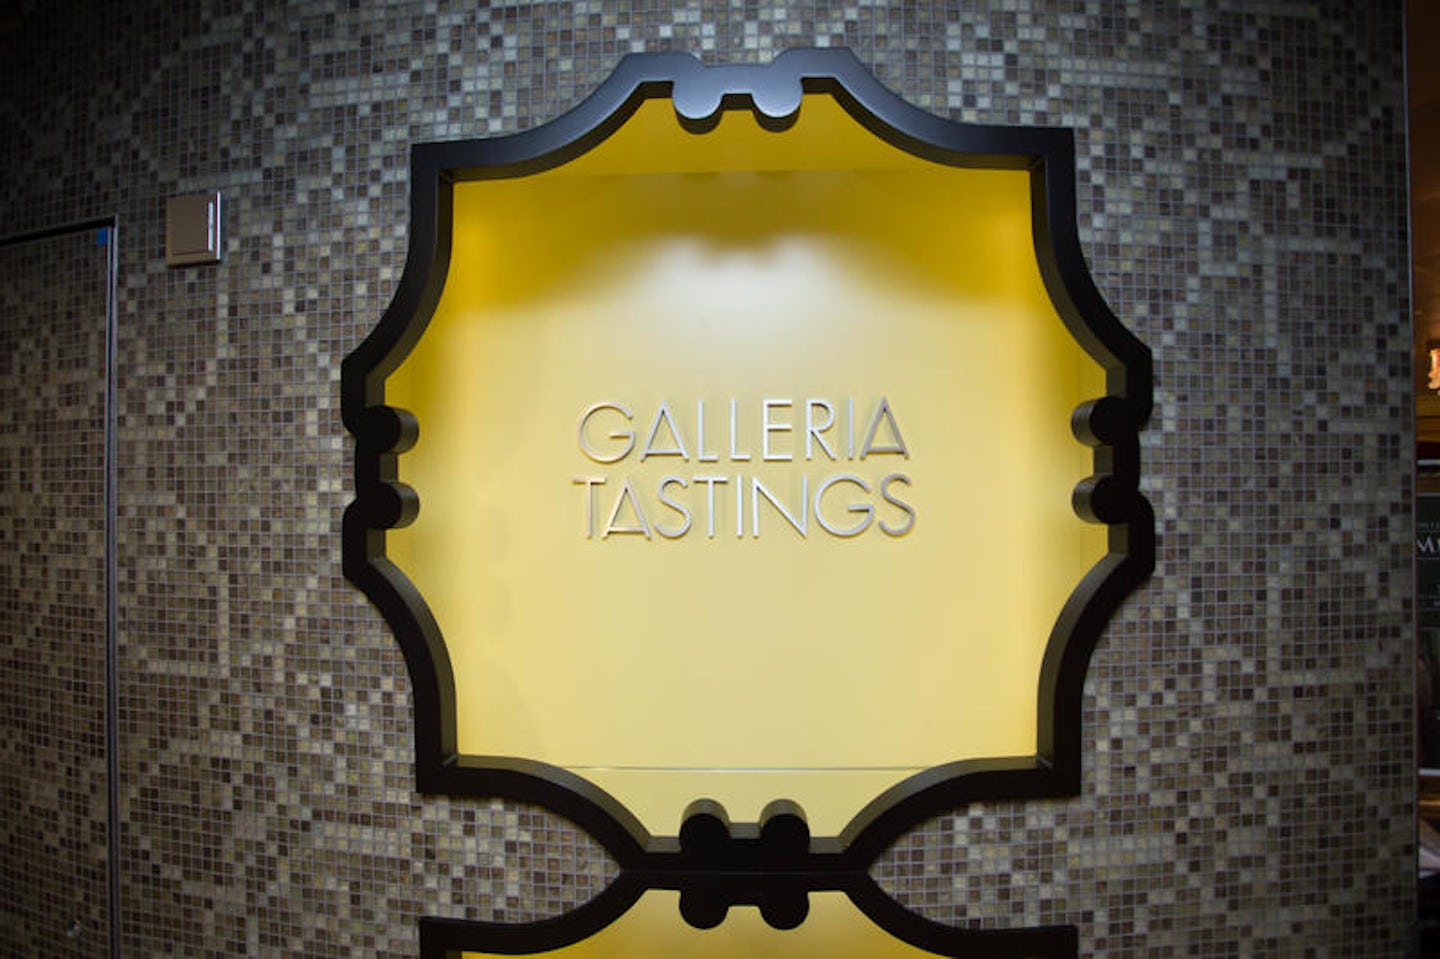 Galleria Tastings on Celebrity Solstice